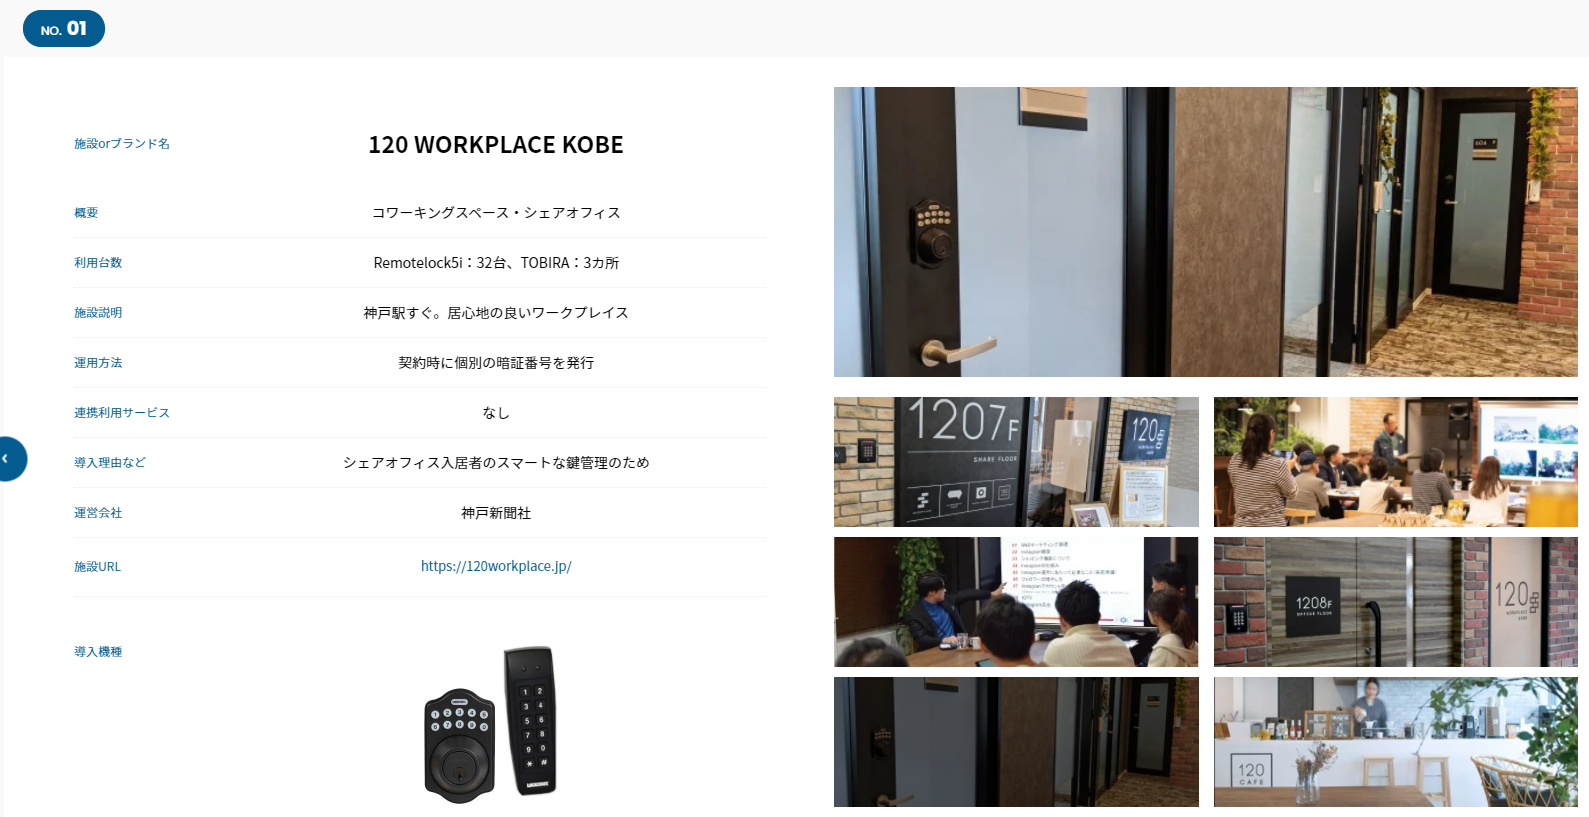 120 workplace kobe, シェアオフィス, コワーキングスペース, 神戸新聞社, 神戸駅